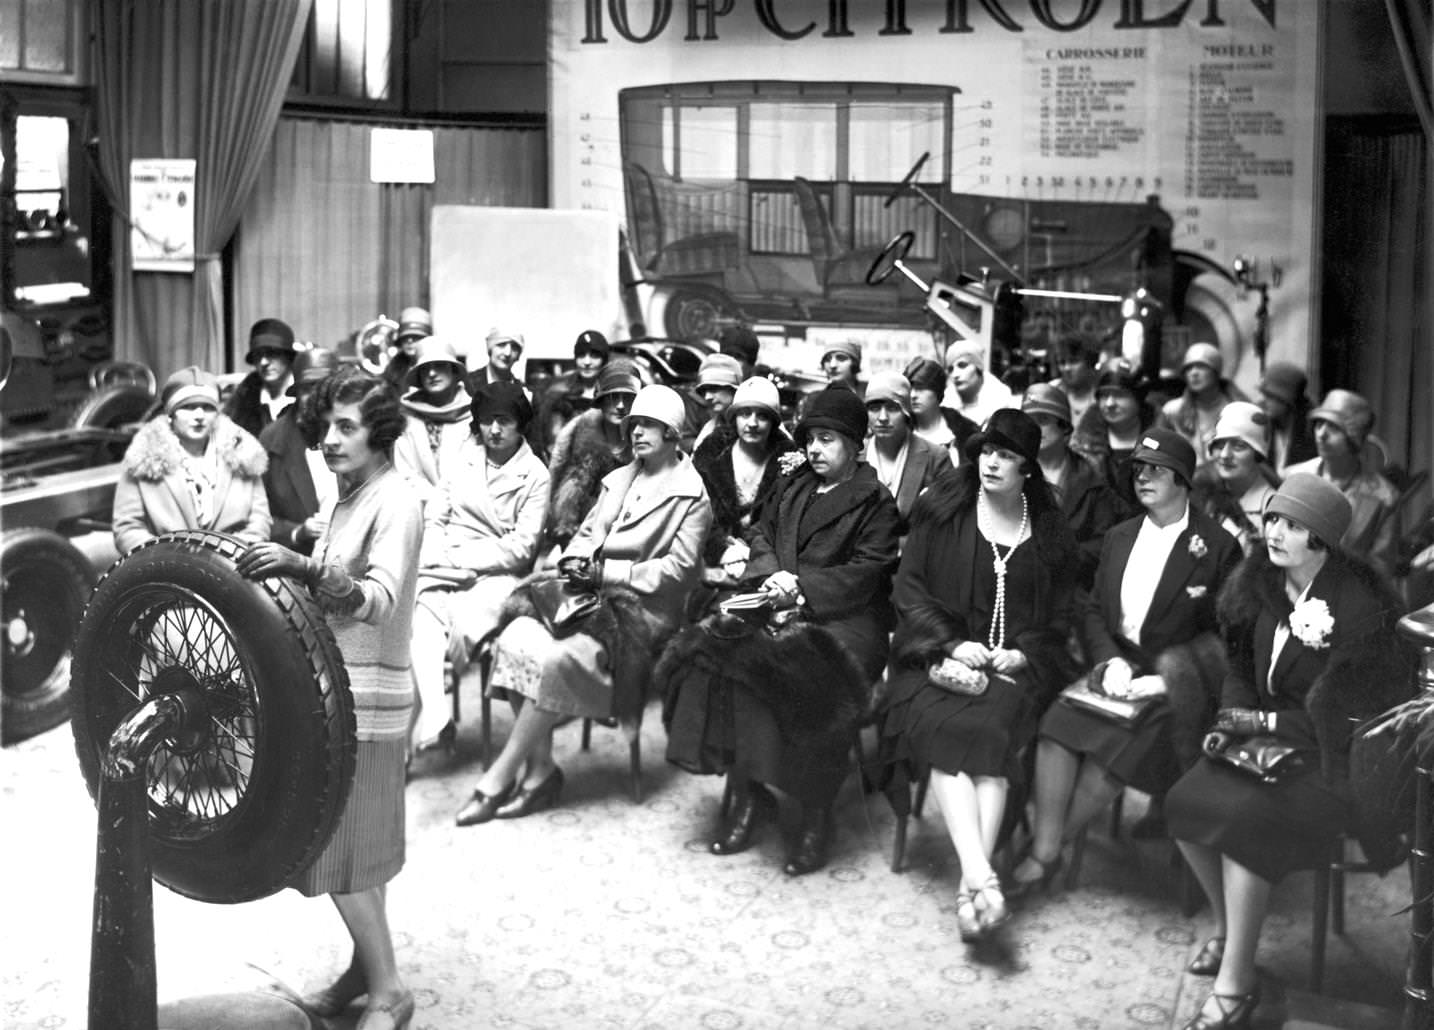 French women in cloche hats attend a car mechanics class run by Ms Versiguy, 1920s